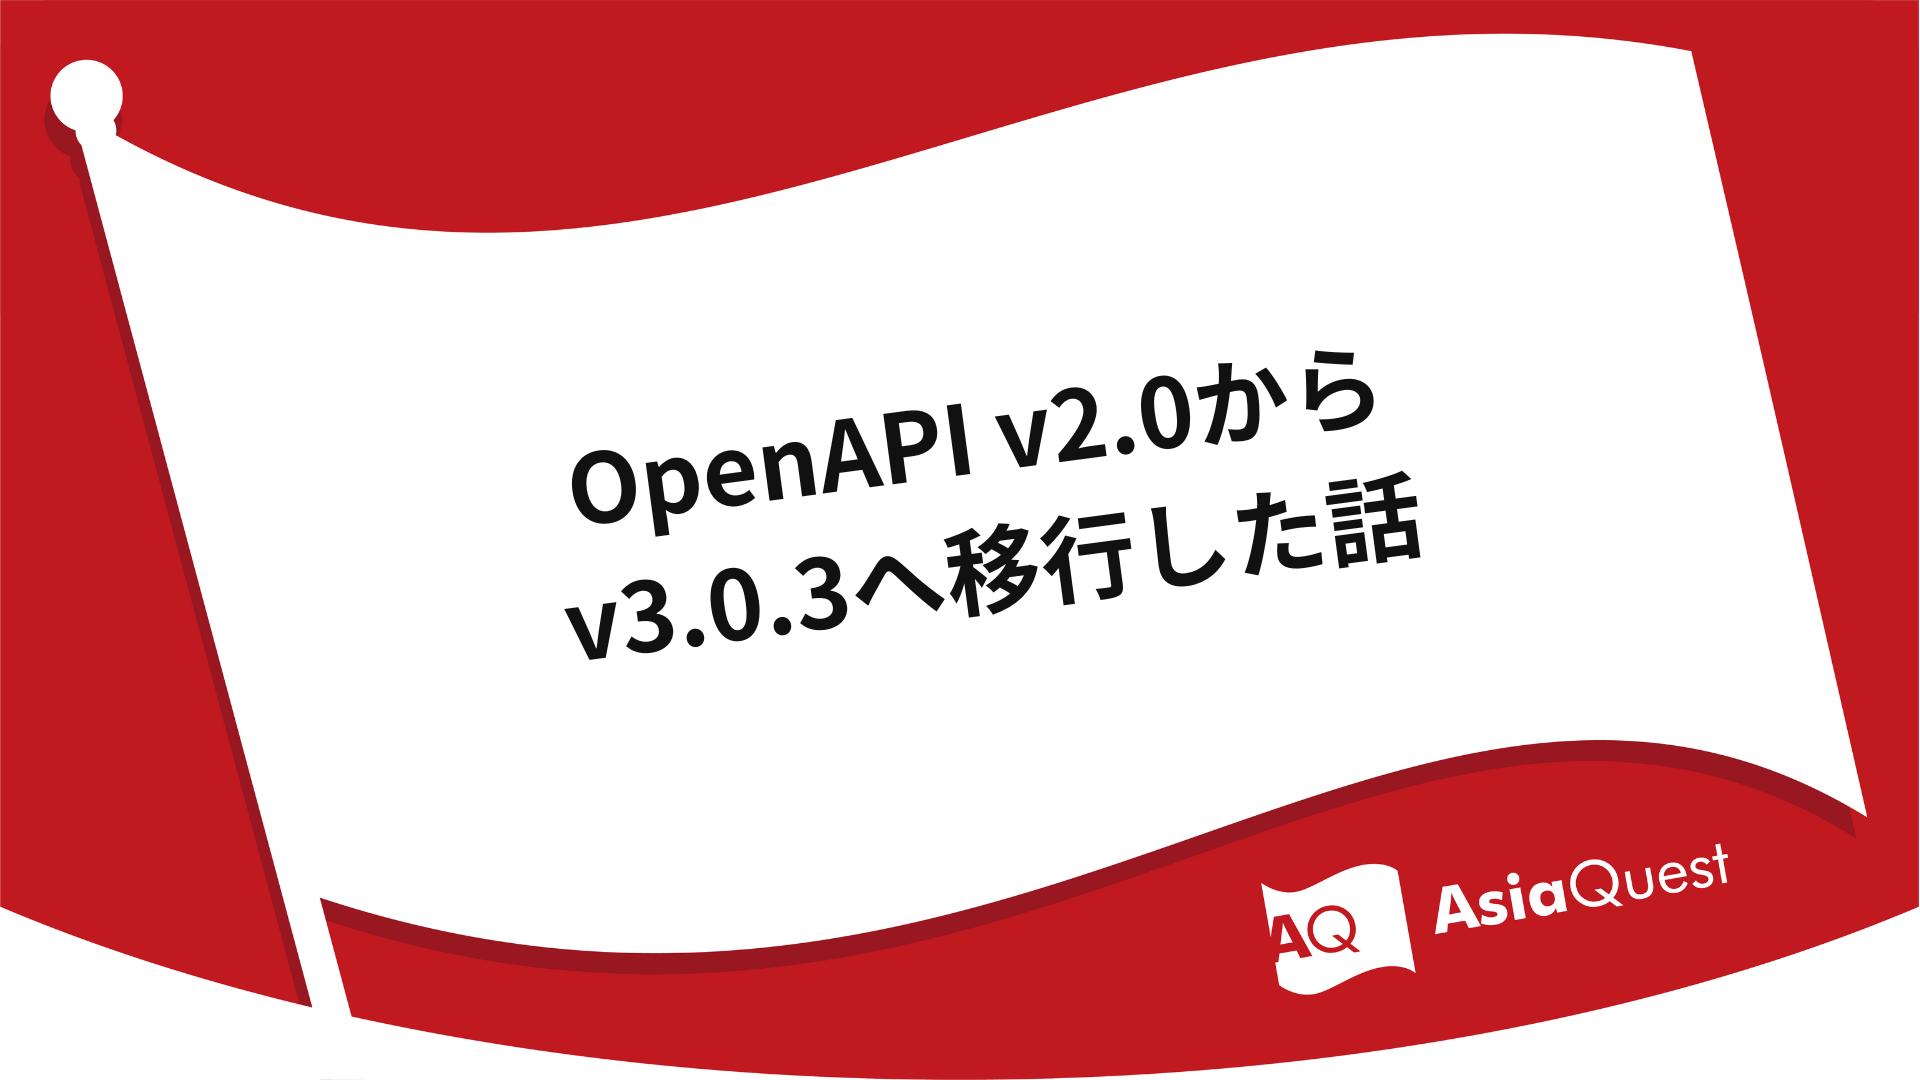 OpenAPI v2.0からv3.0.3へ移行した話